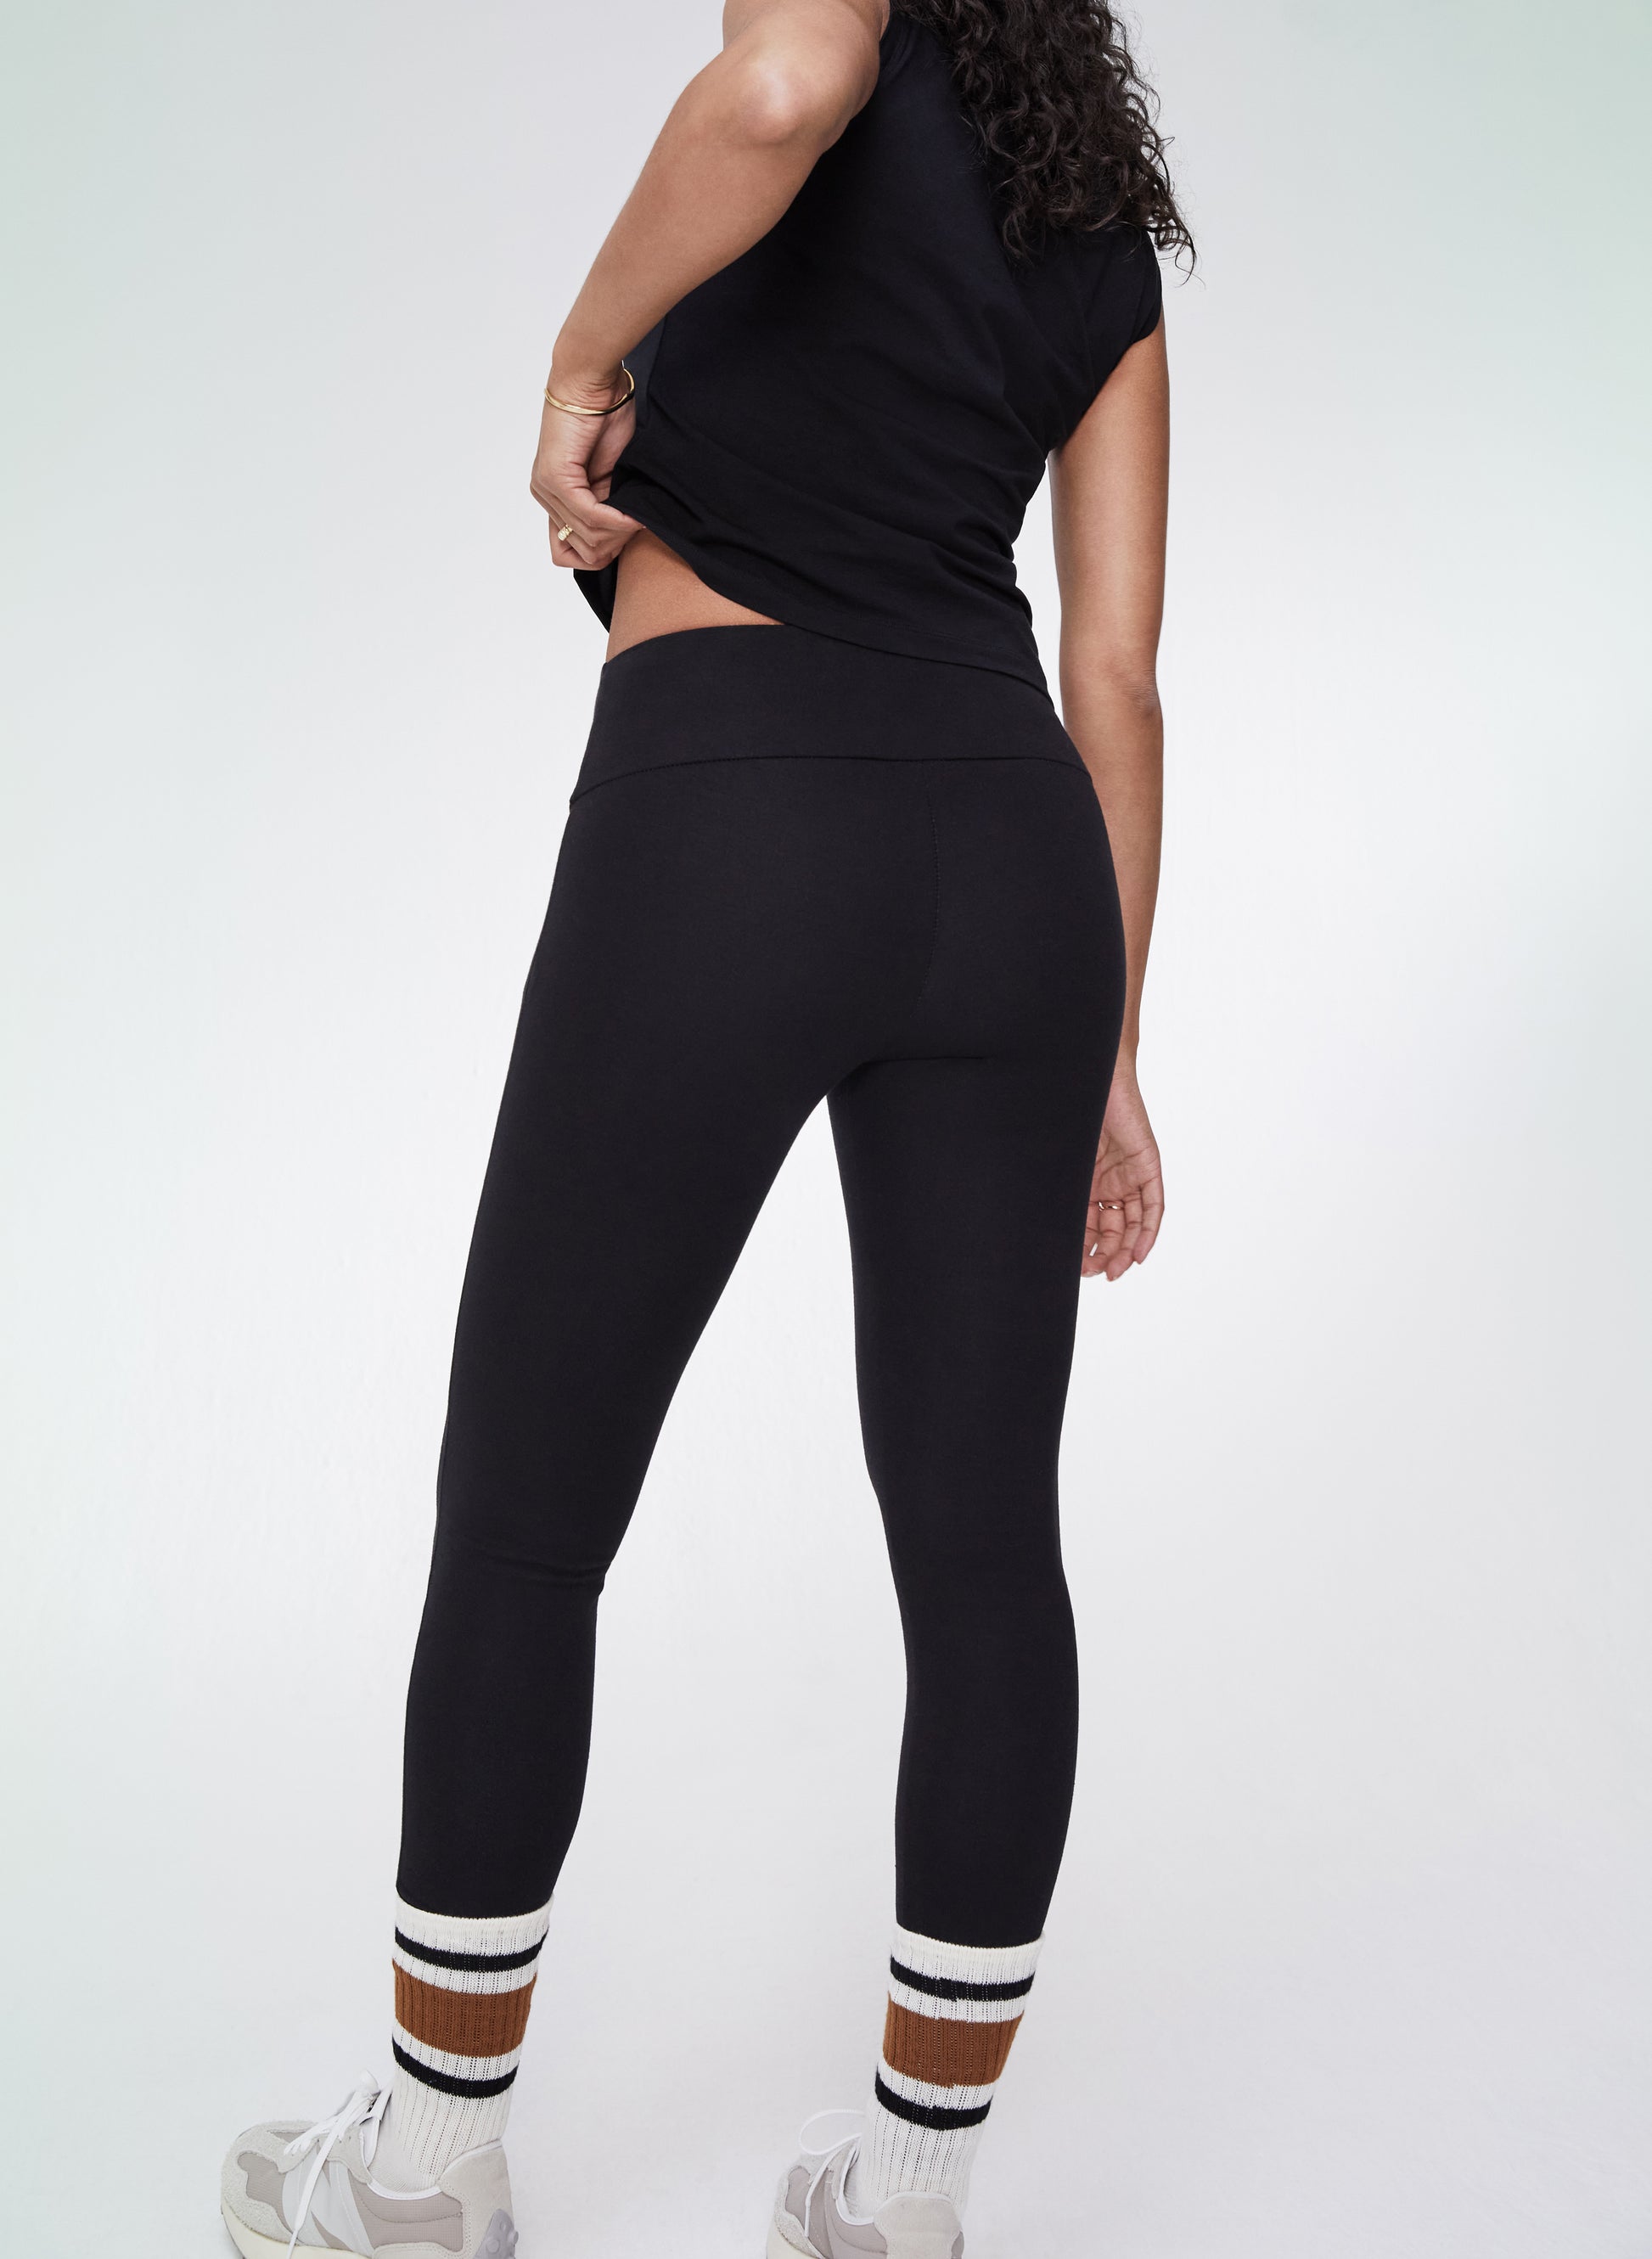 Ekohelsinki - Yoga Pocket Leggings in black, organic cotton, by